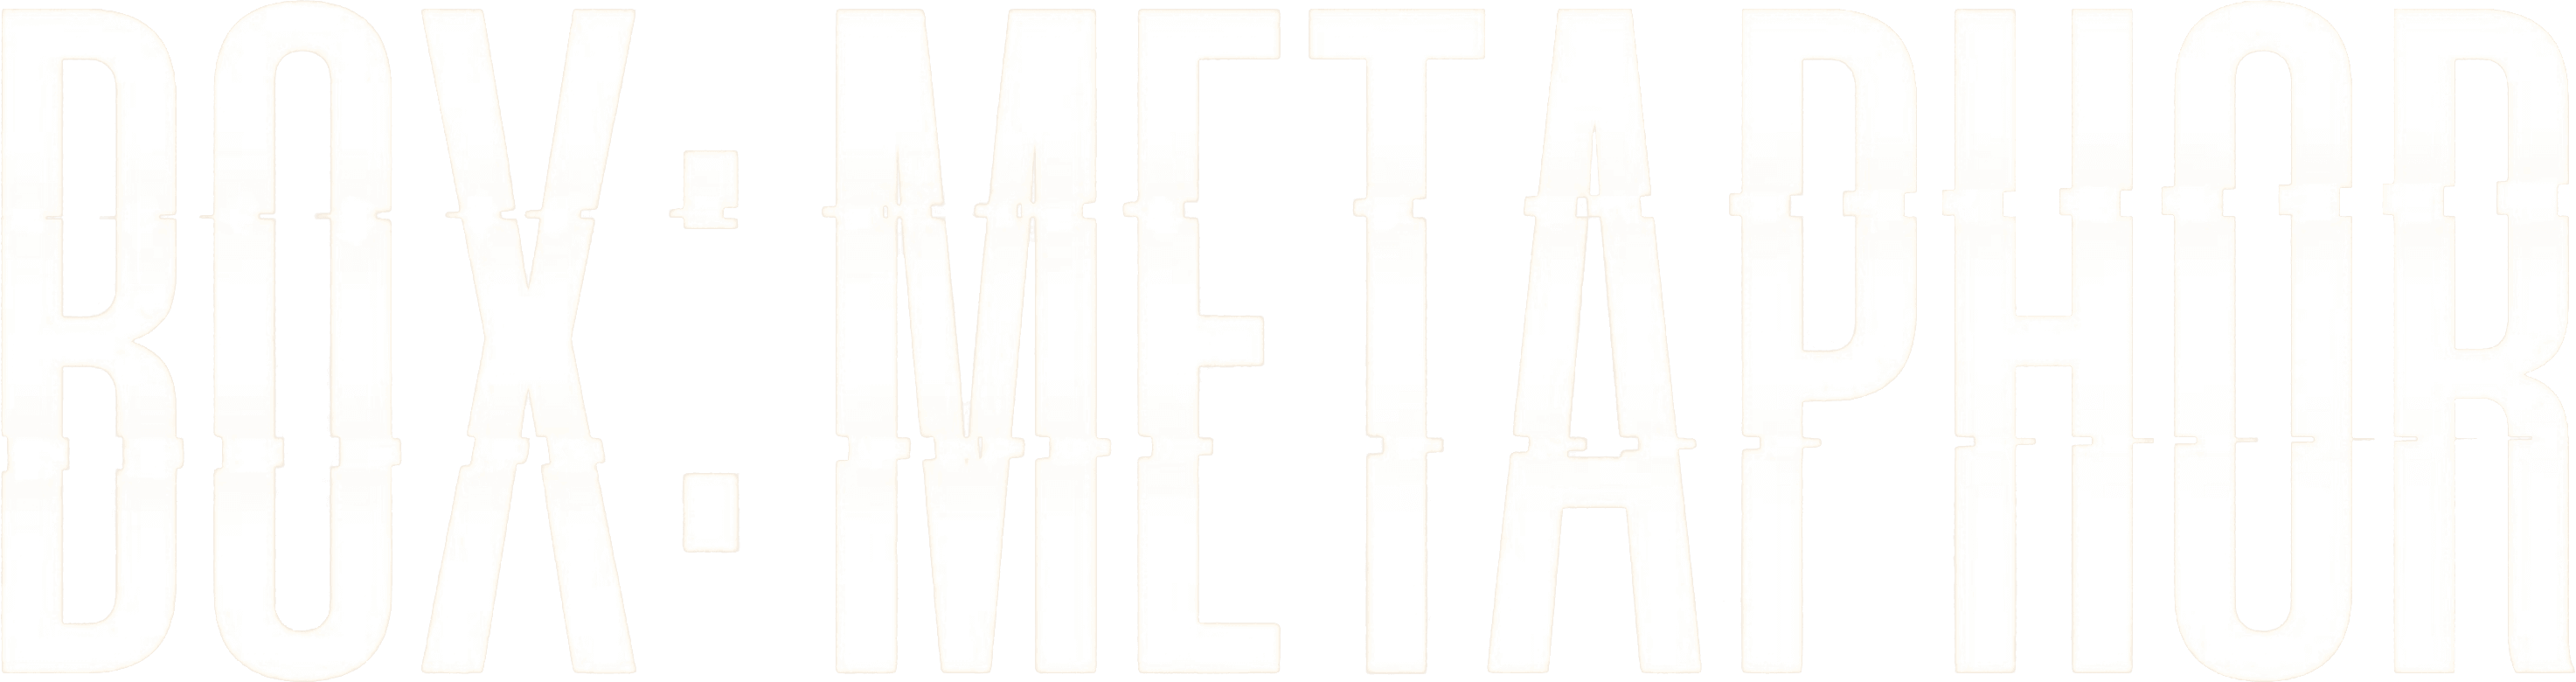 Box: Metaphor logo